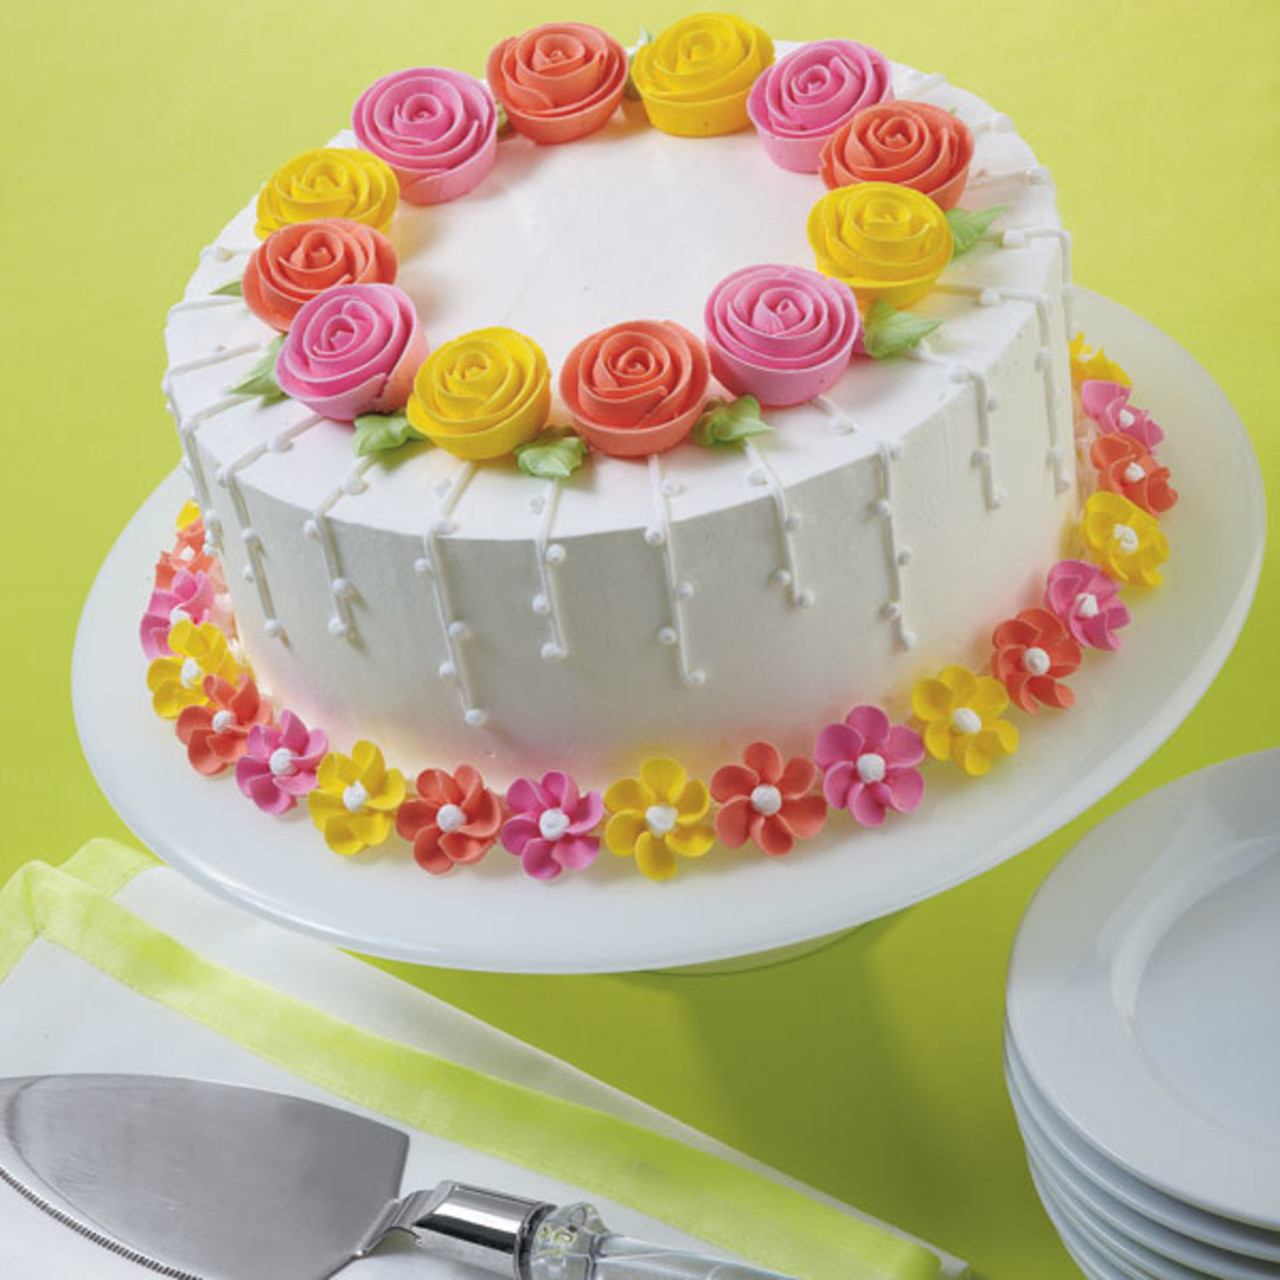 Flower drip cake - FunCakes